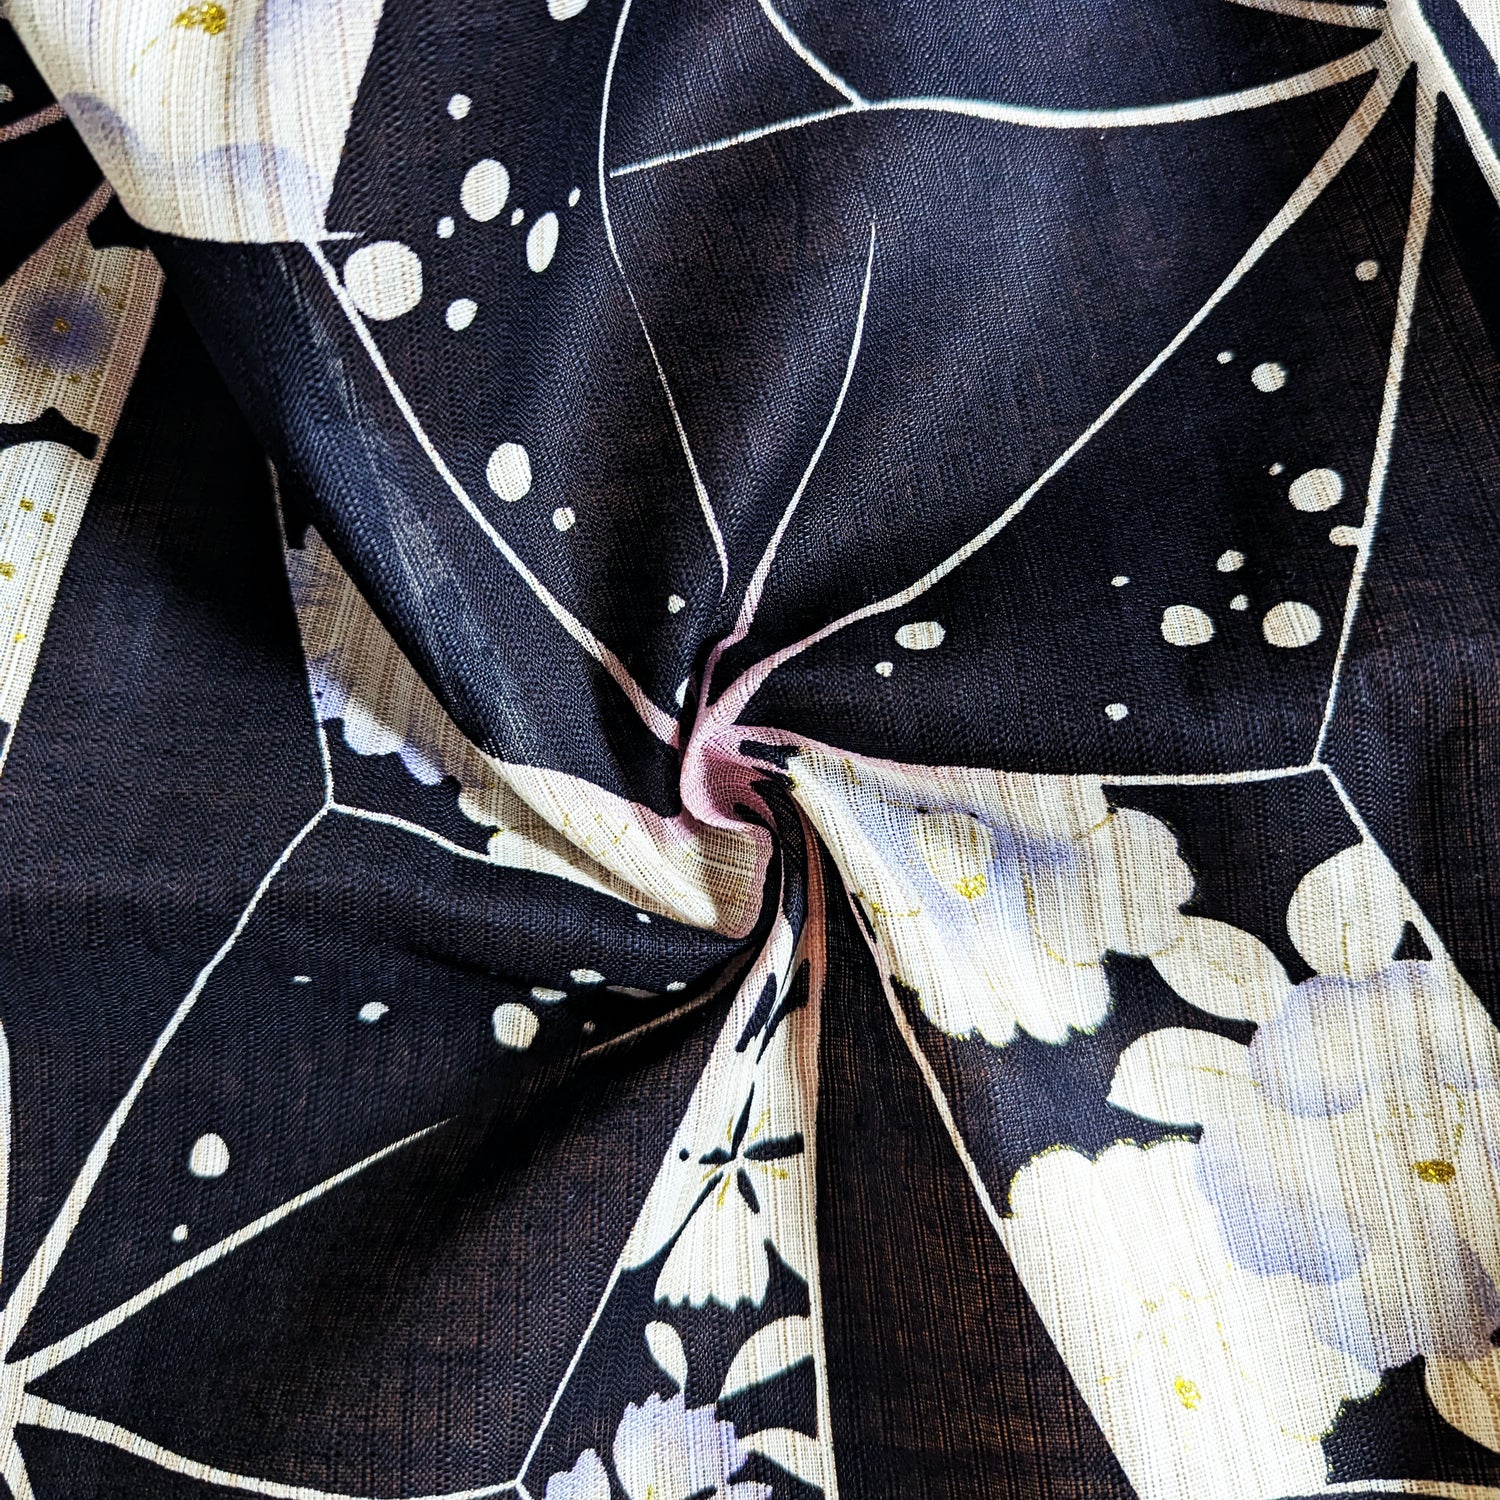 Traditional Japanese Yukata Kimono - Starbursts and Flowers in Black